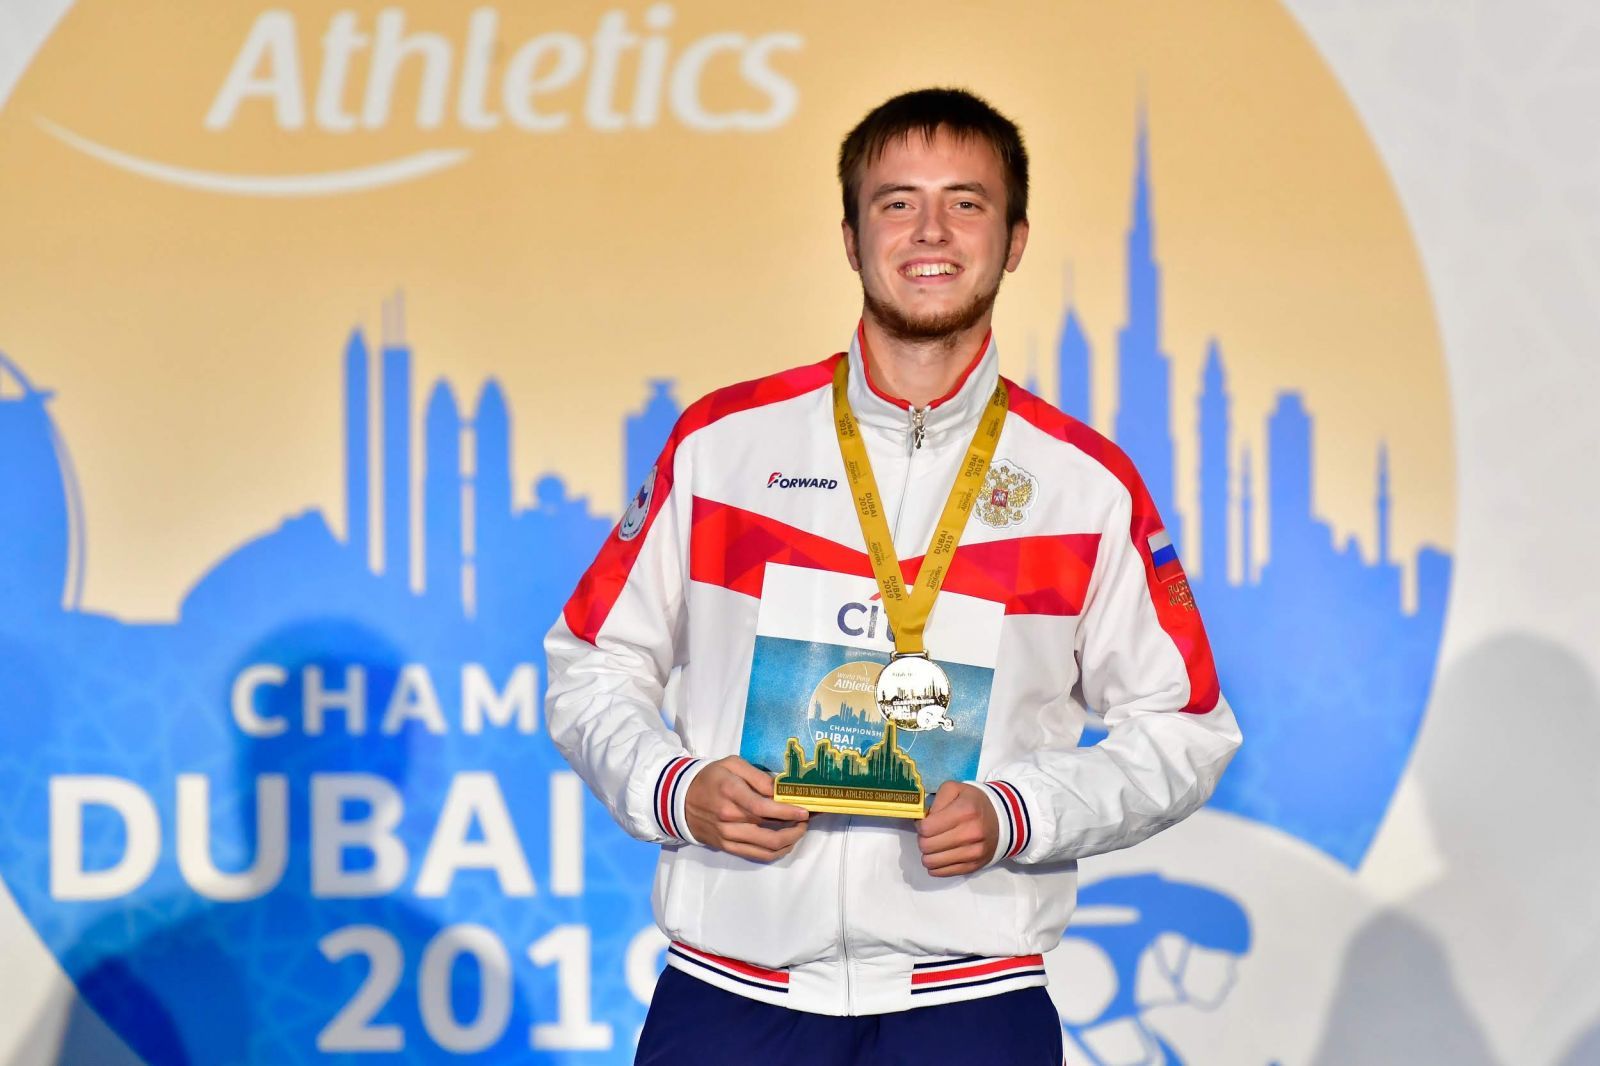 Андрей Вдовин – знаменосец от команды ПКР на Паралимпийских играх